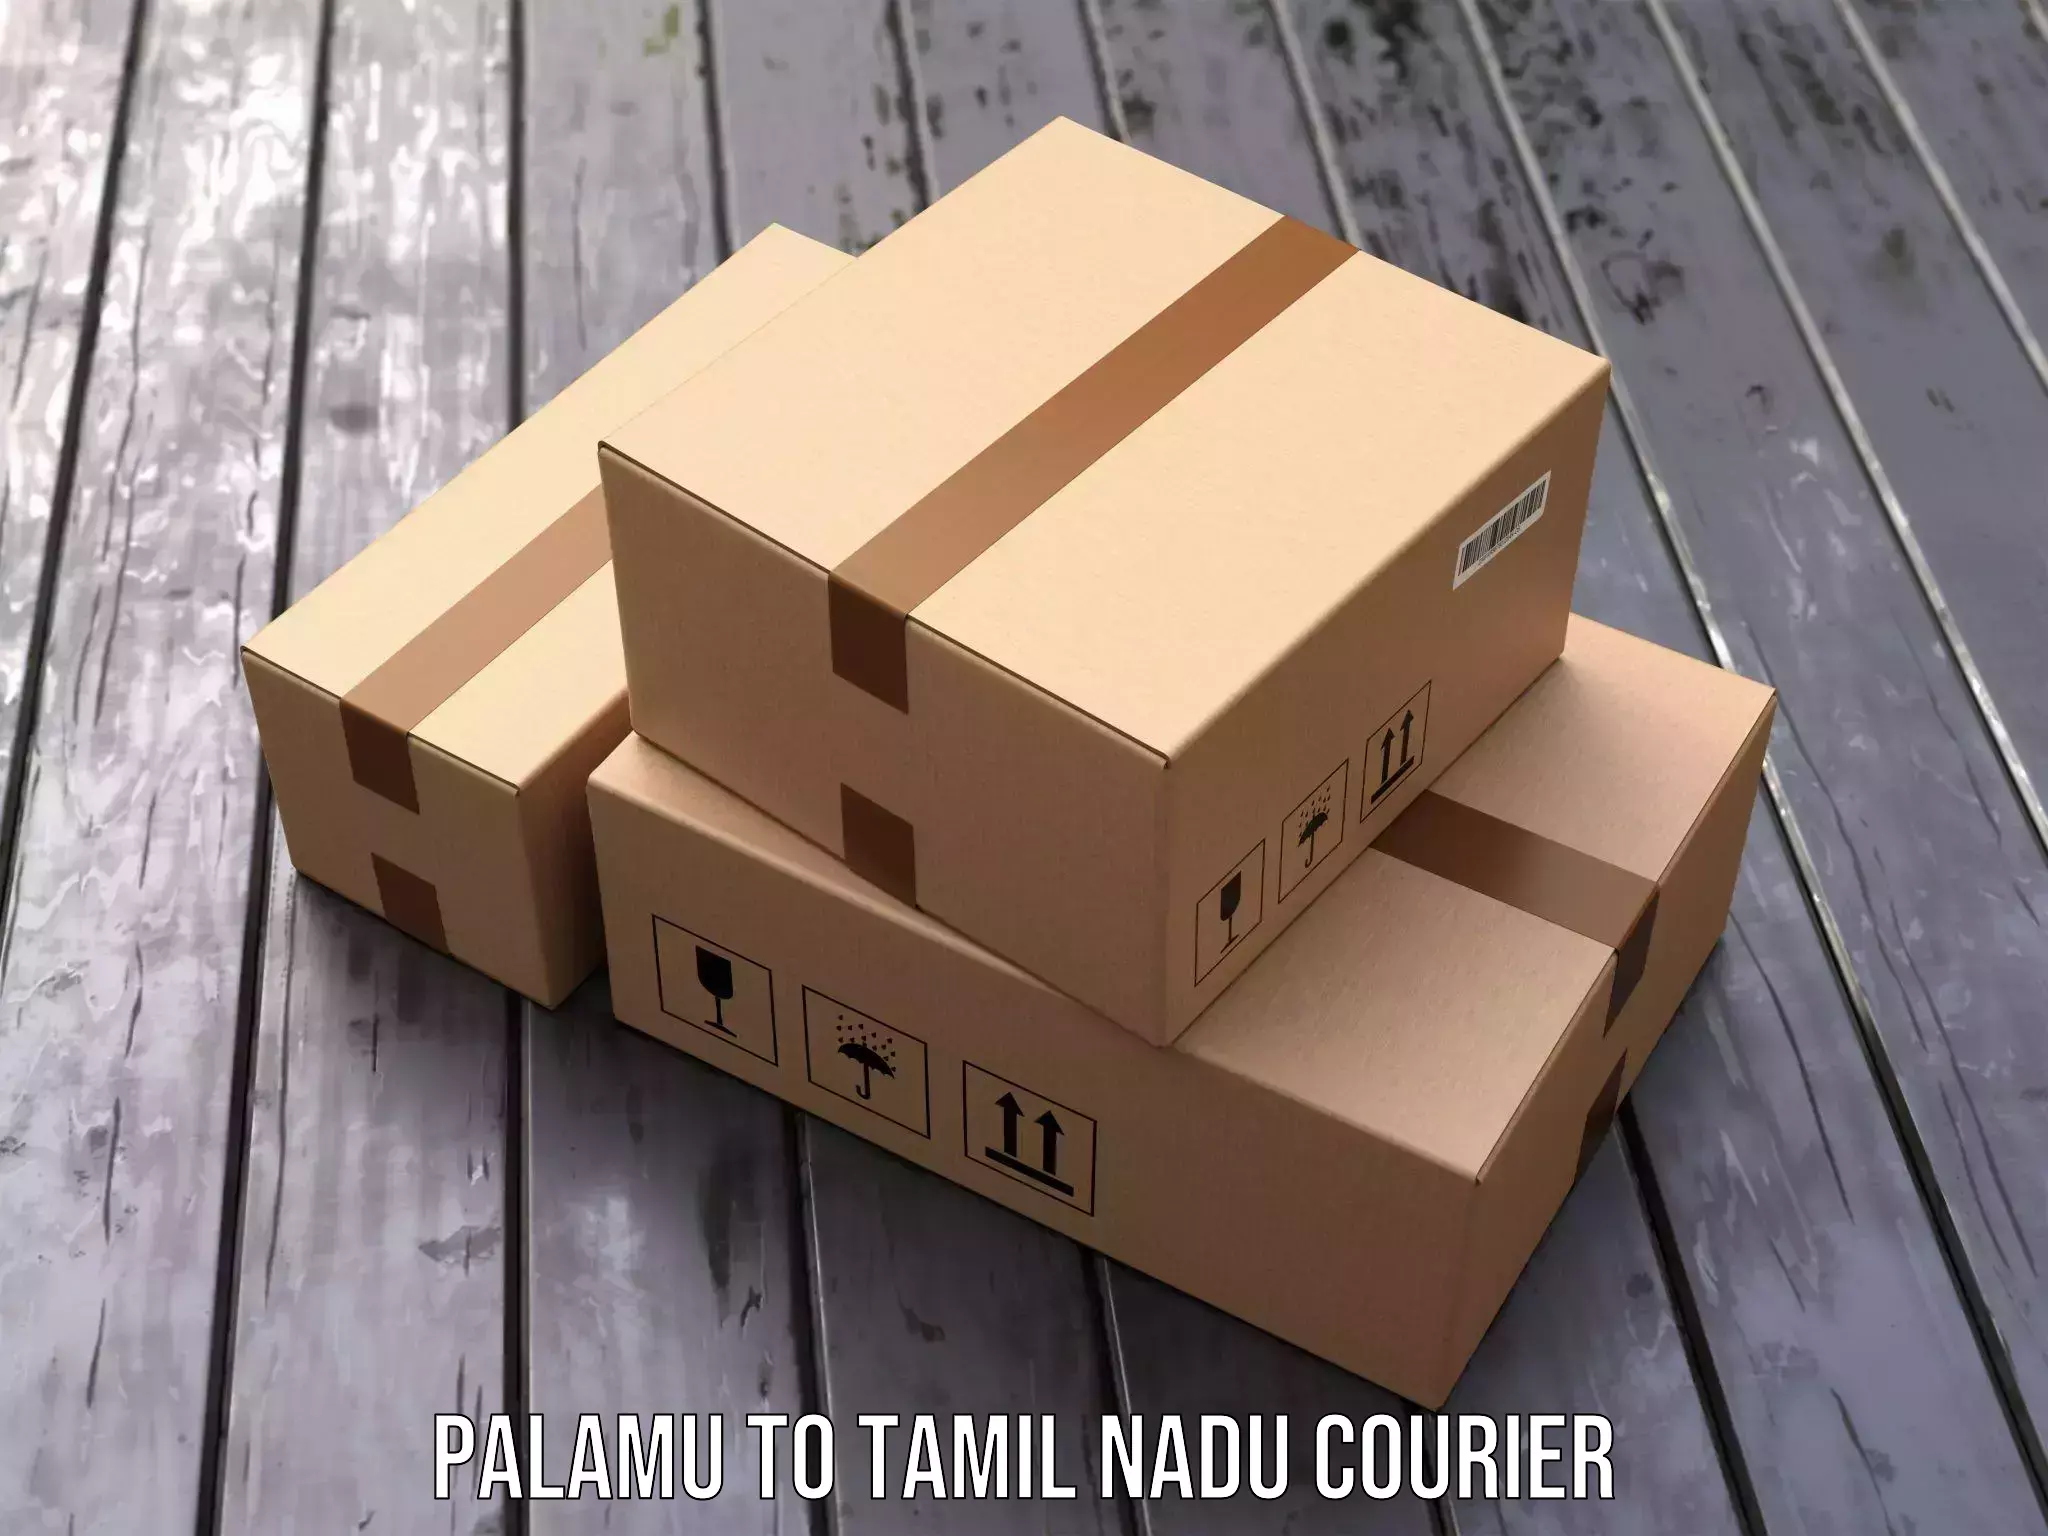 Professional courier handling Palamu to Tamil Nadu